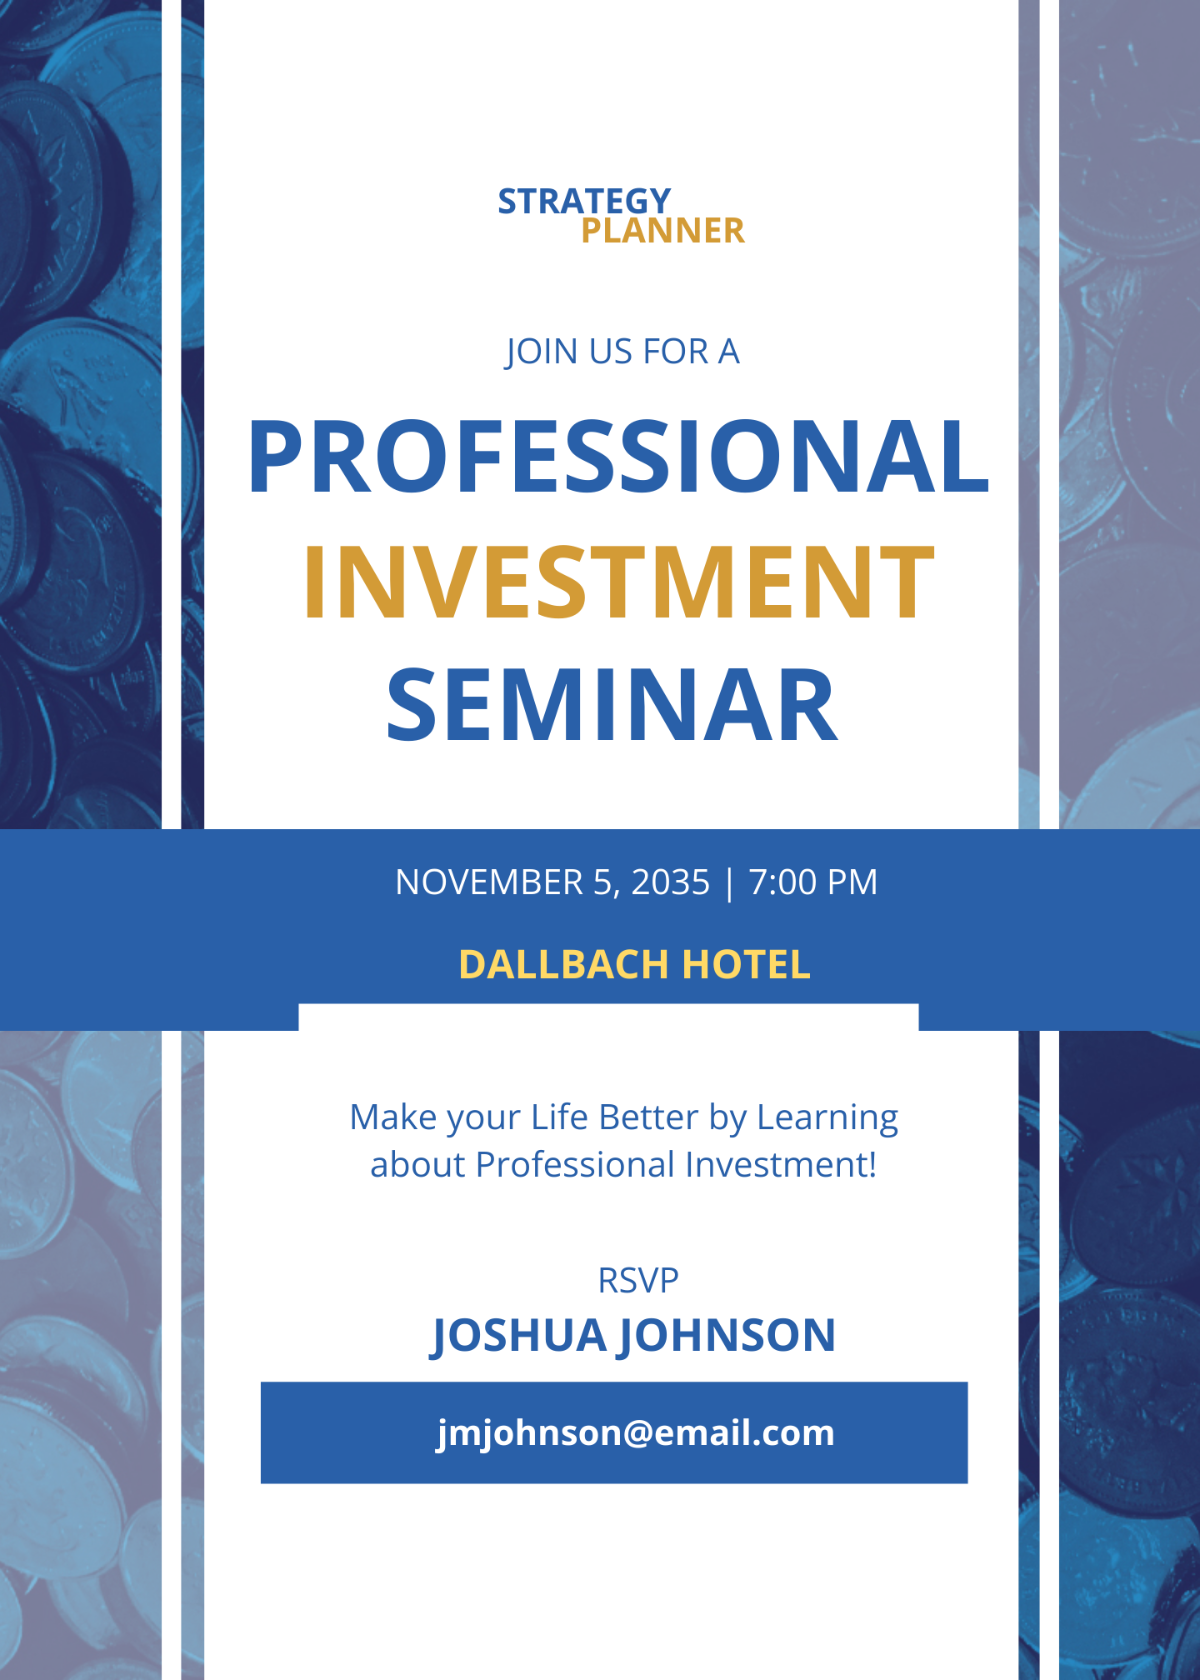 Professional Investment Seminar Invitation